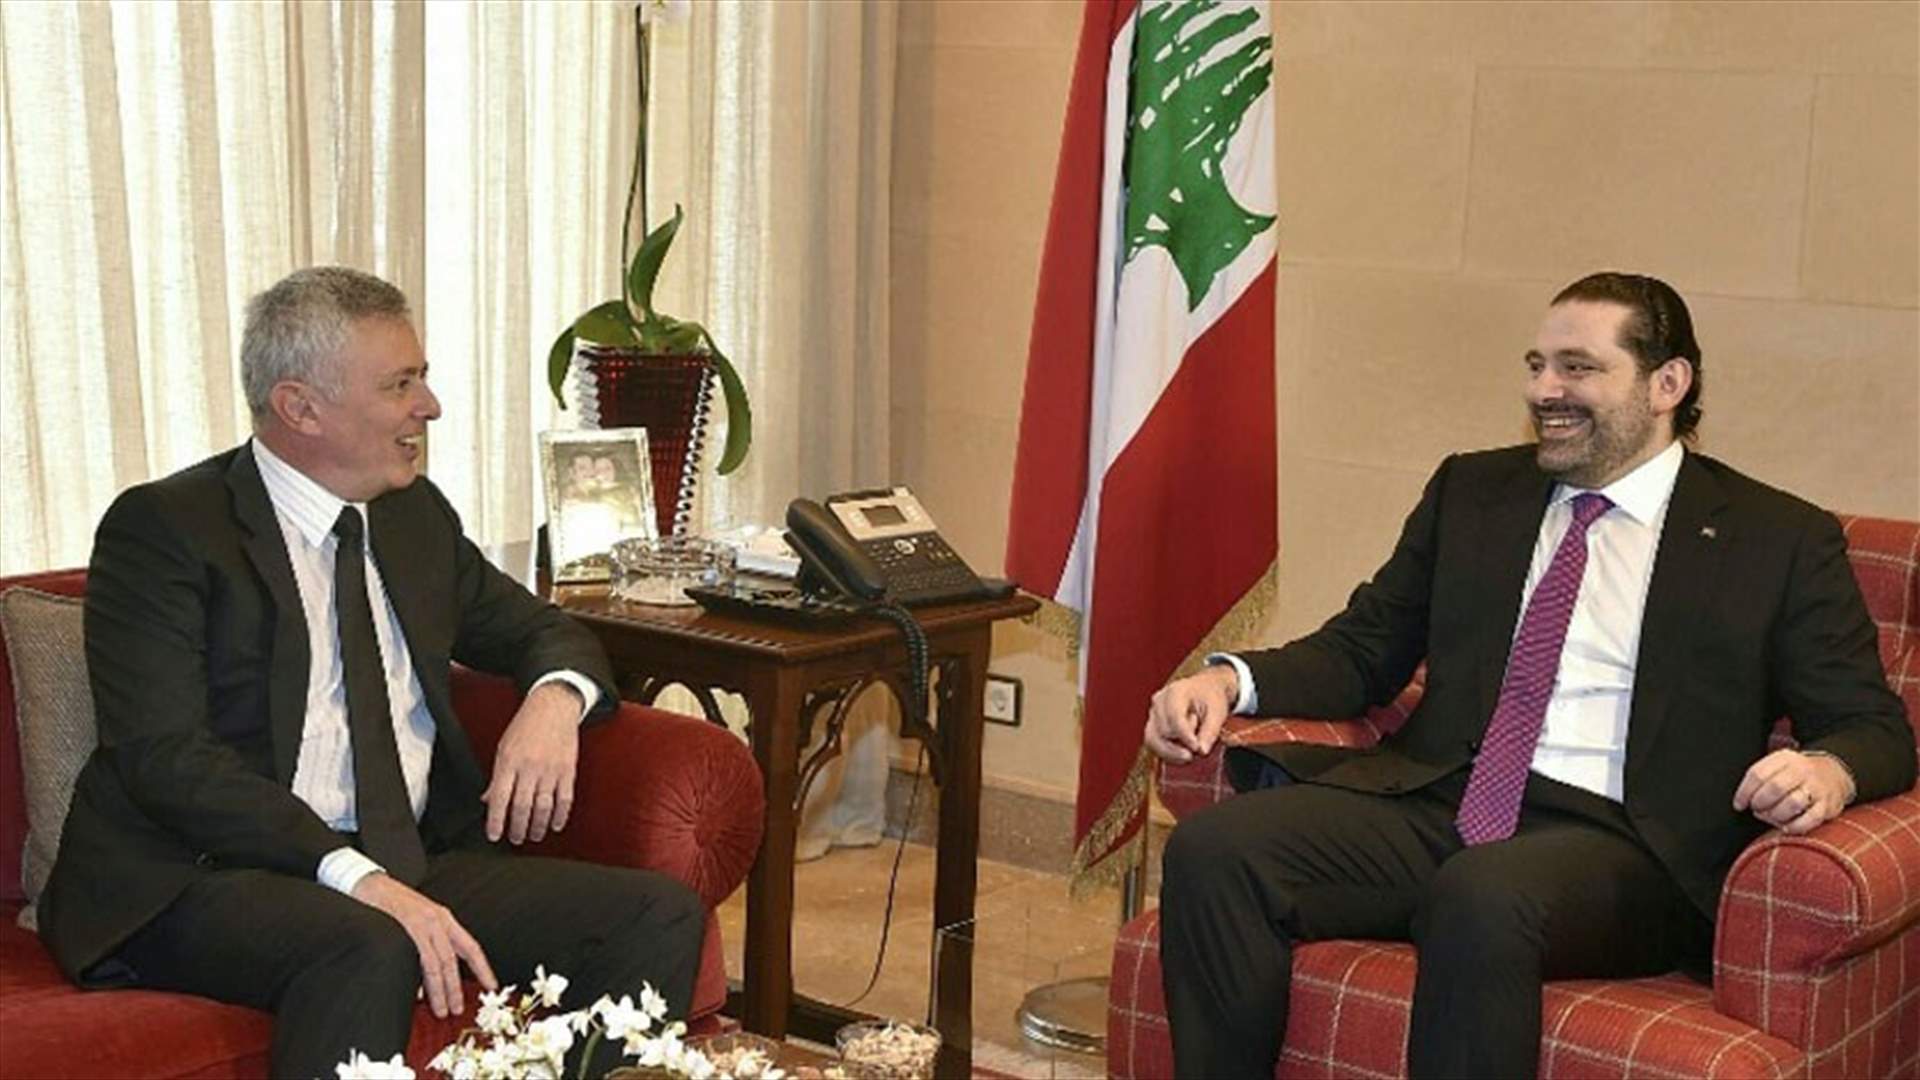 PM Hariri meets with MP Frangieh in Beit al-Wasat